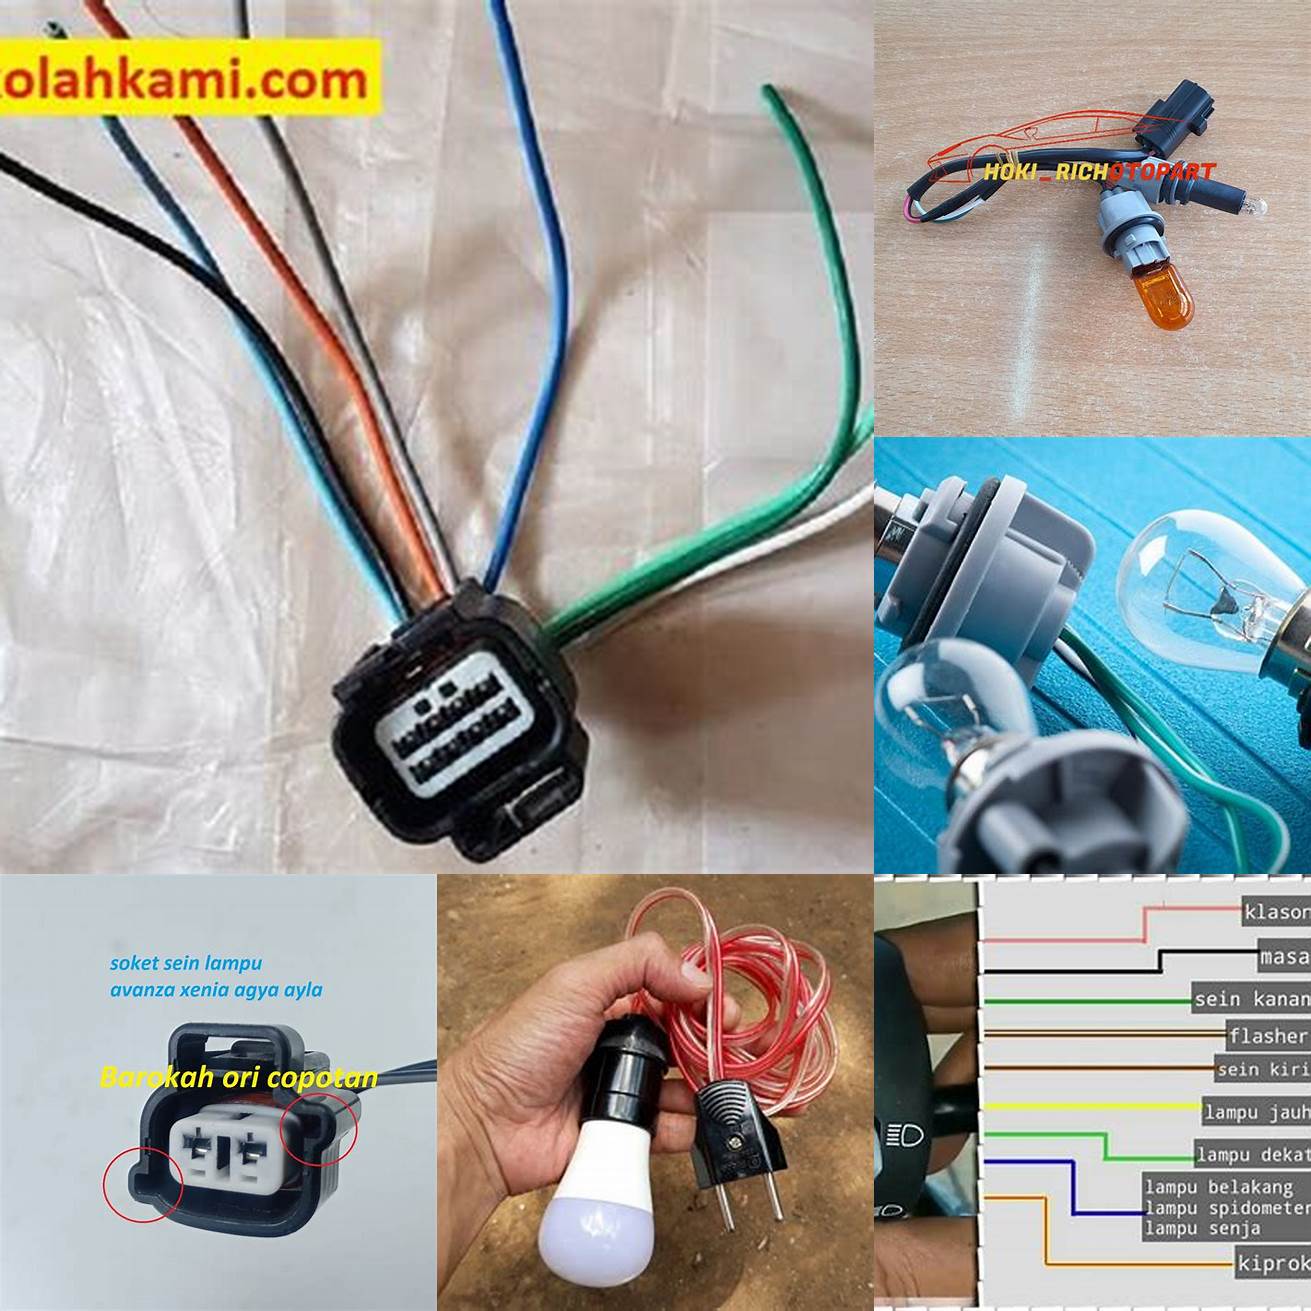 Periksa kabel dan soket lampu secara berkala untuk memastikan tidak ada kerusakan atau konsleting